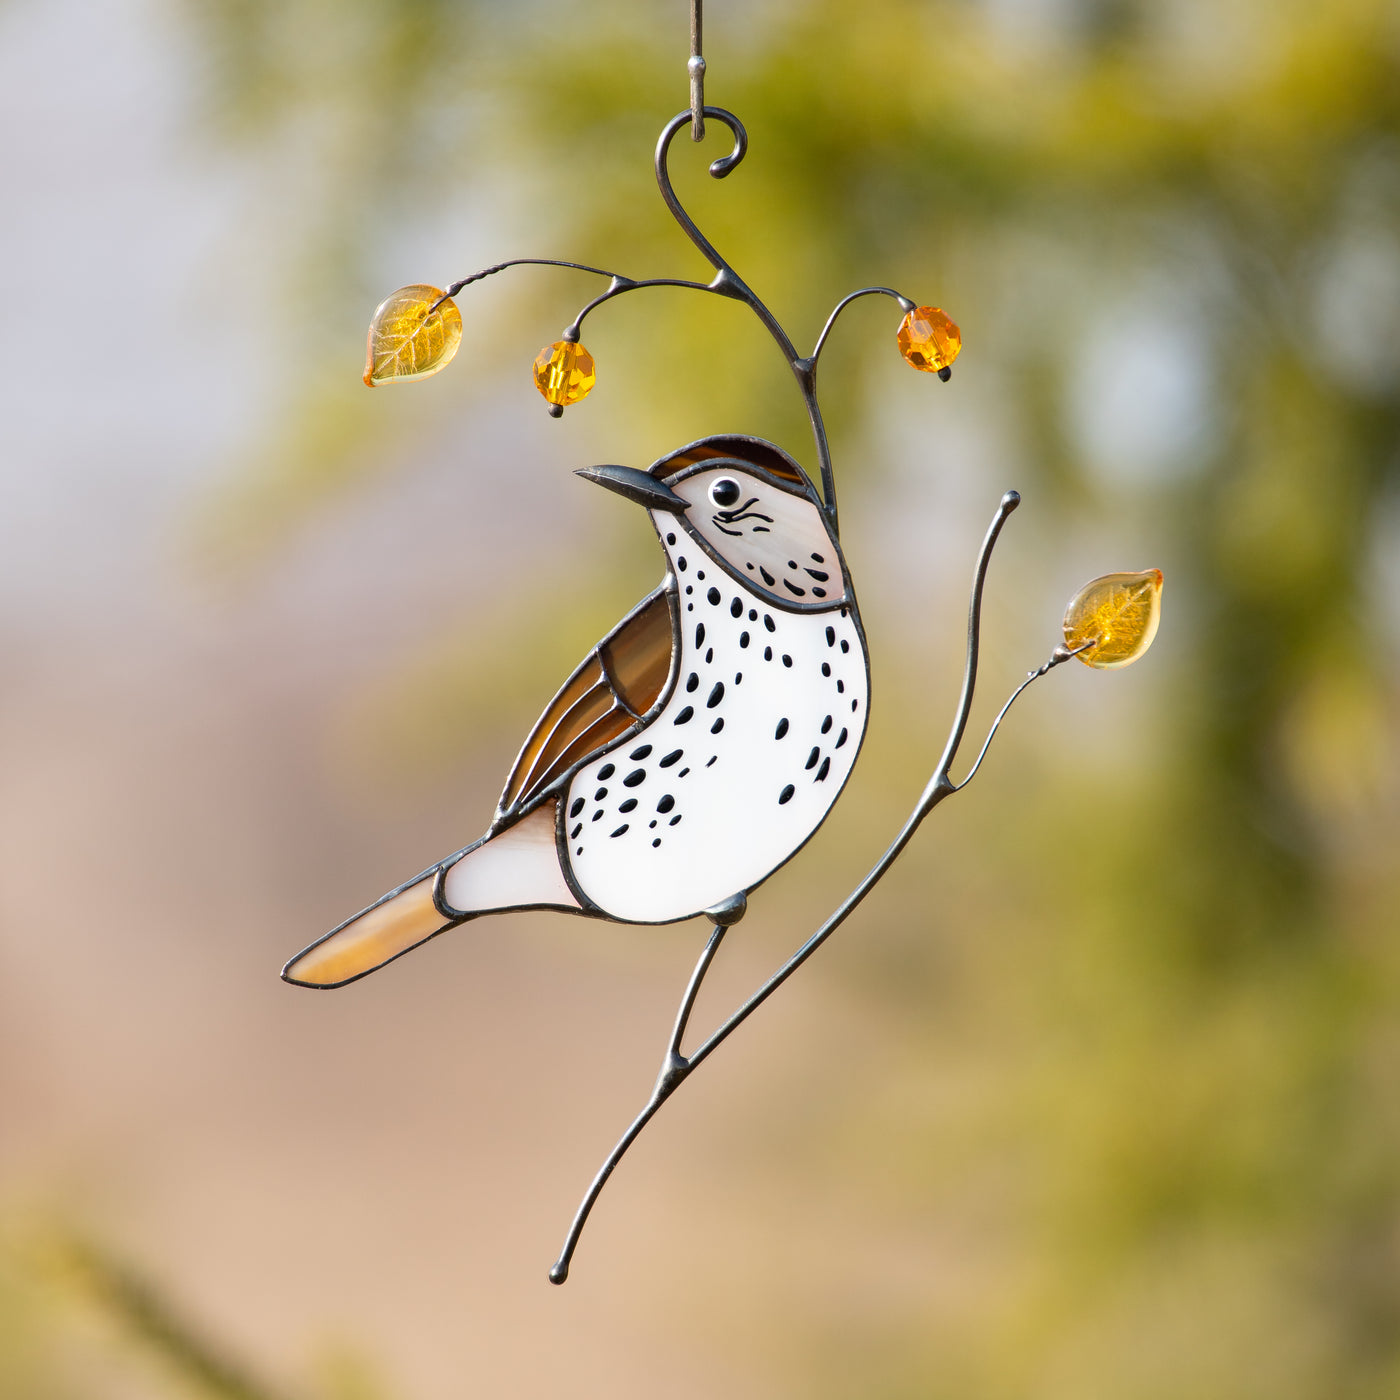 handmade glass bird ornament on the branch